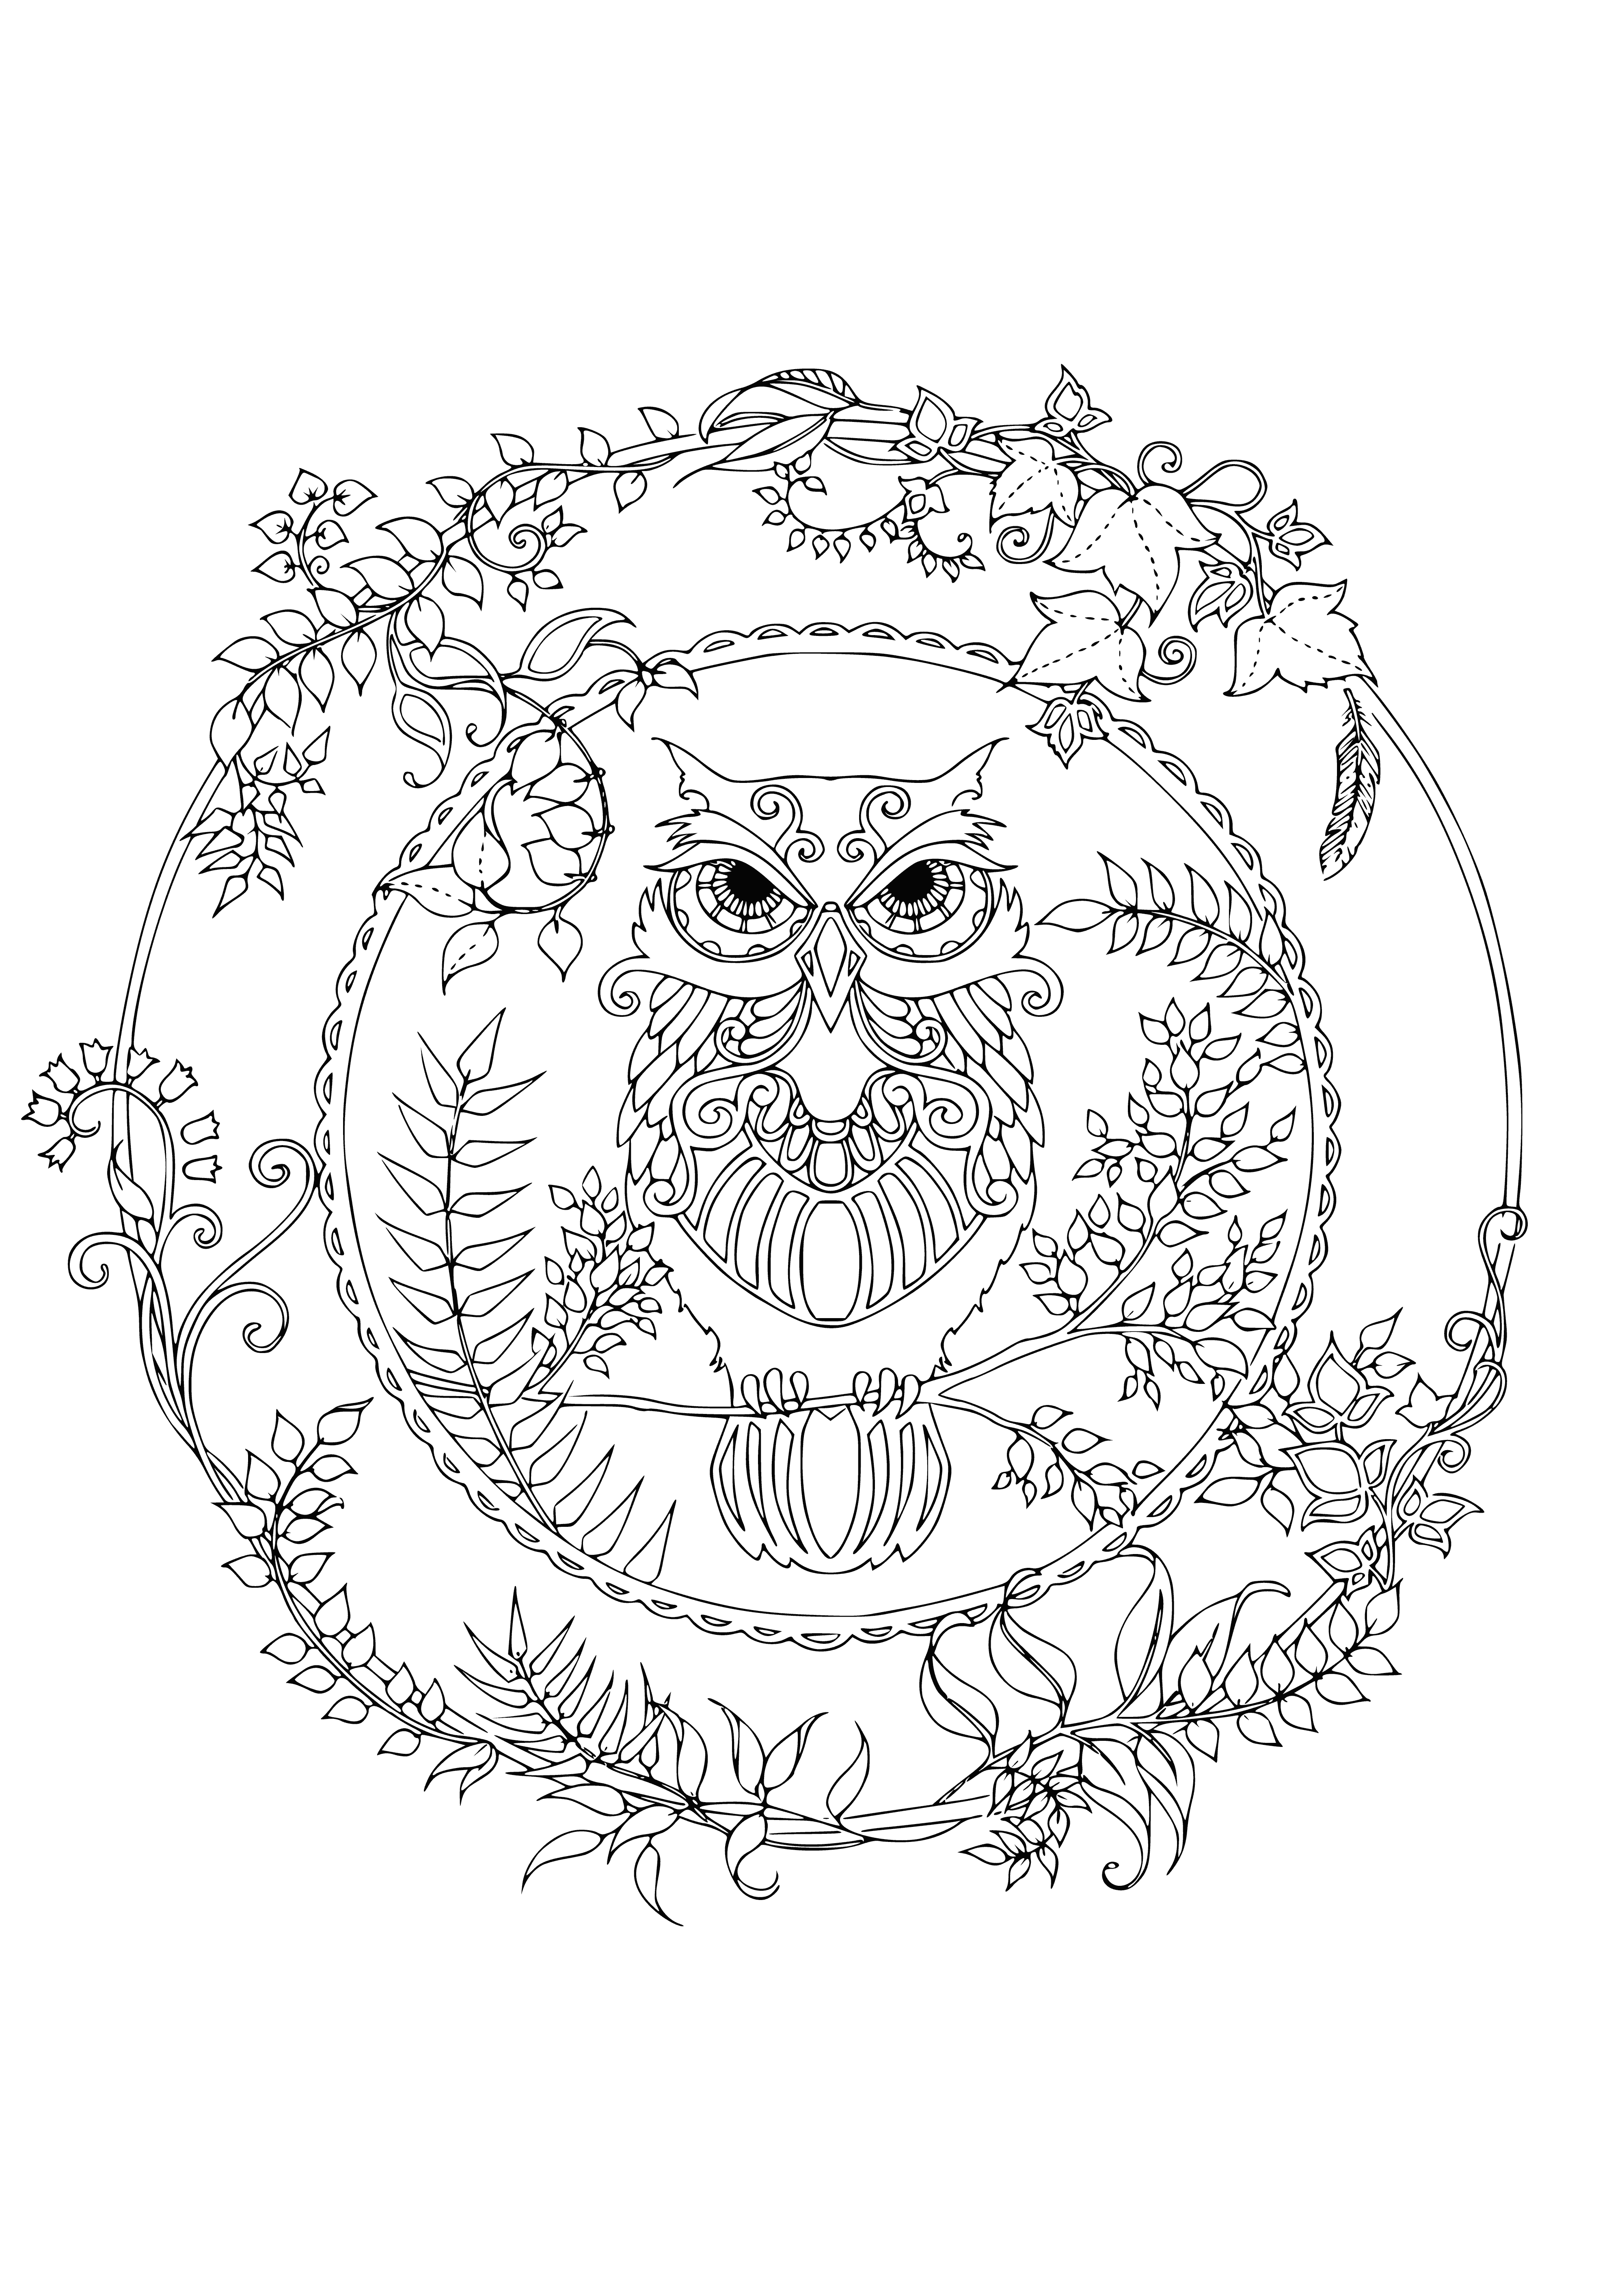 Owl mandala coloring page